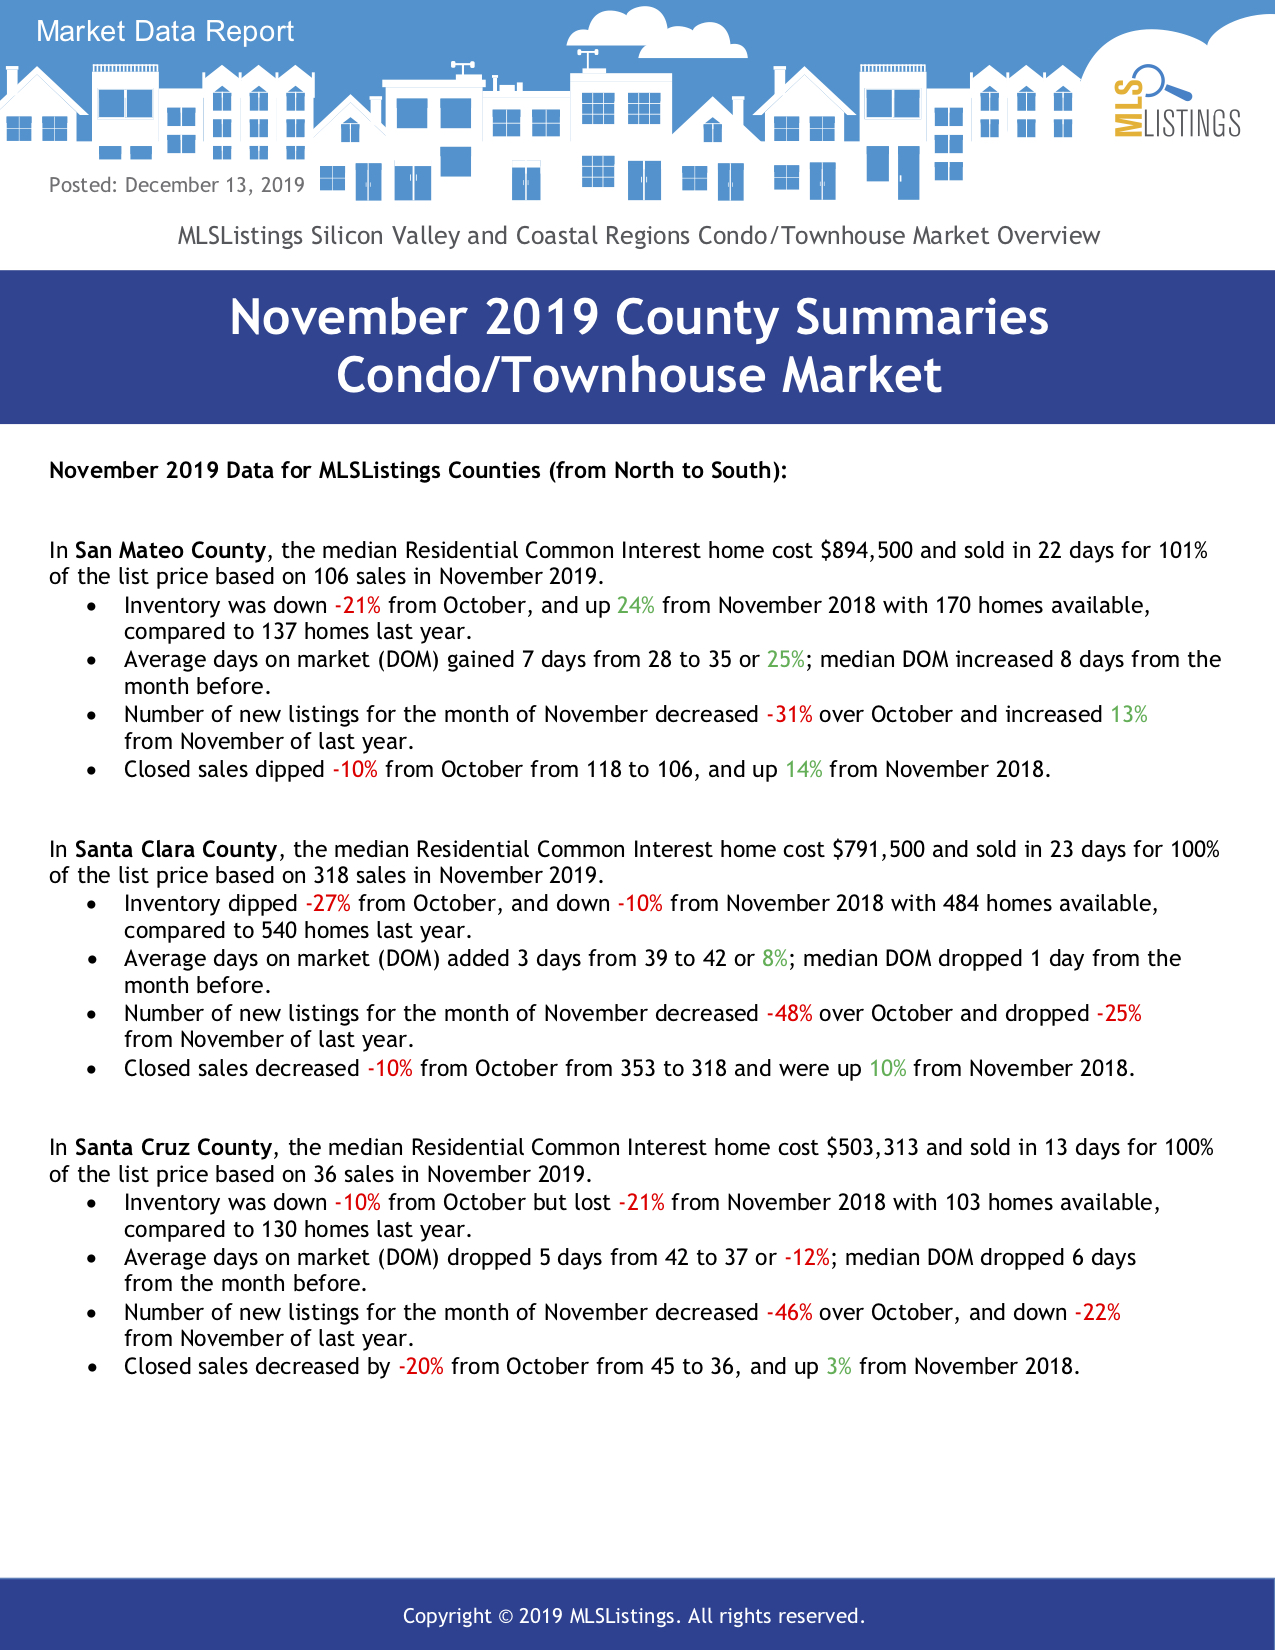 CondoTownhouse Market November 2019